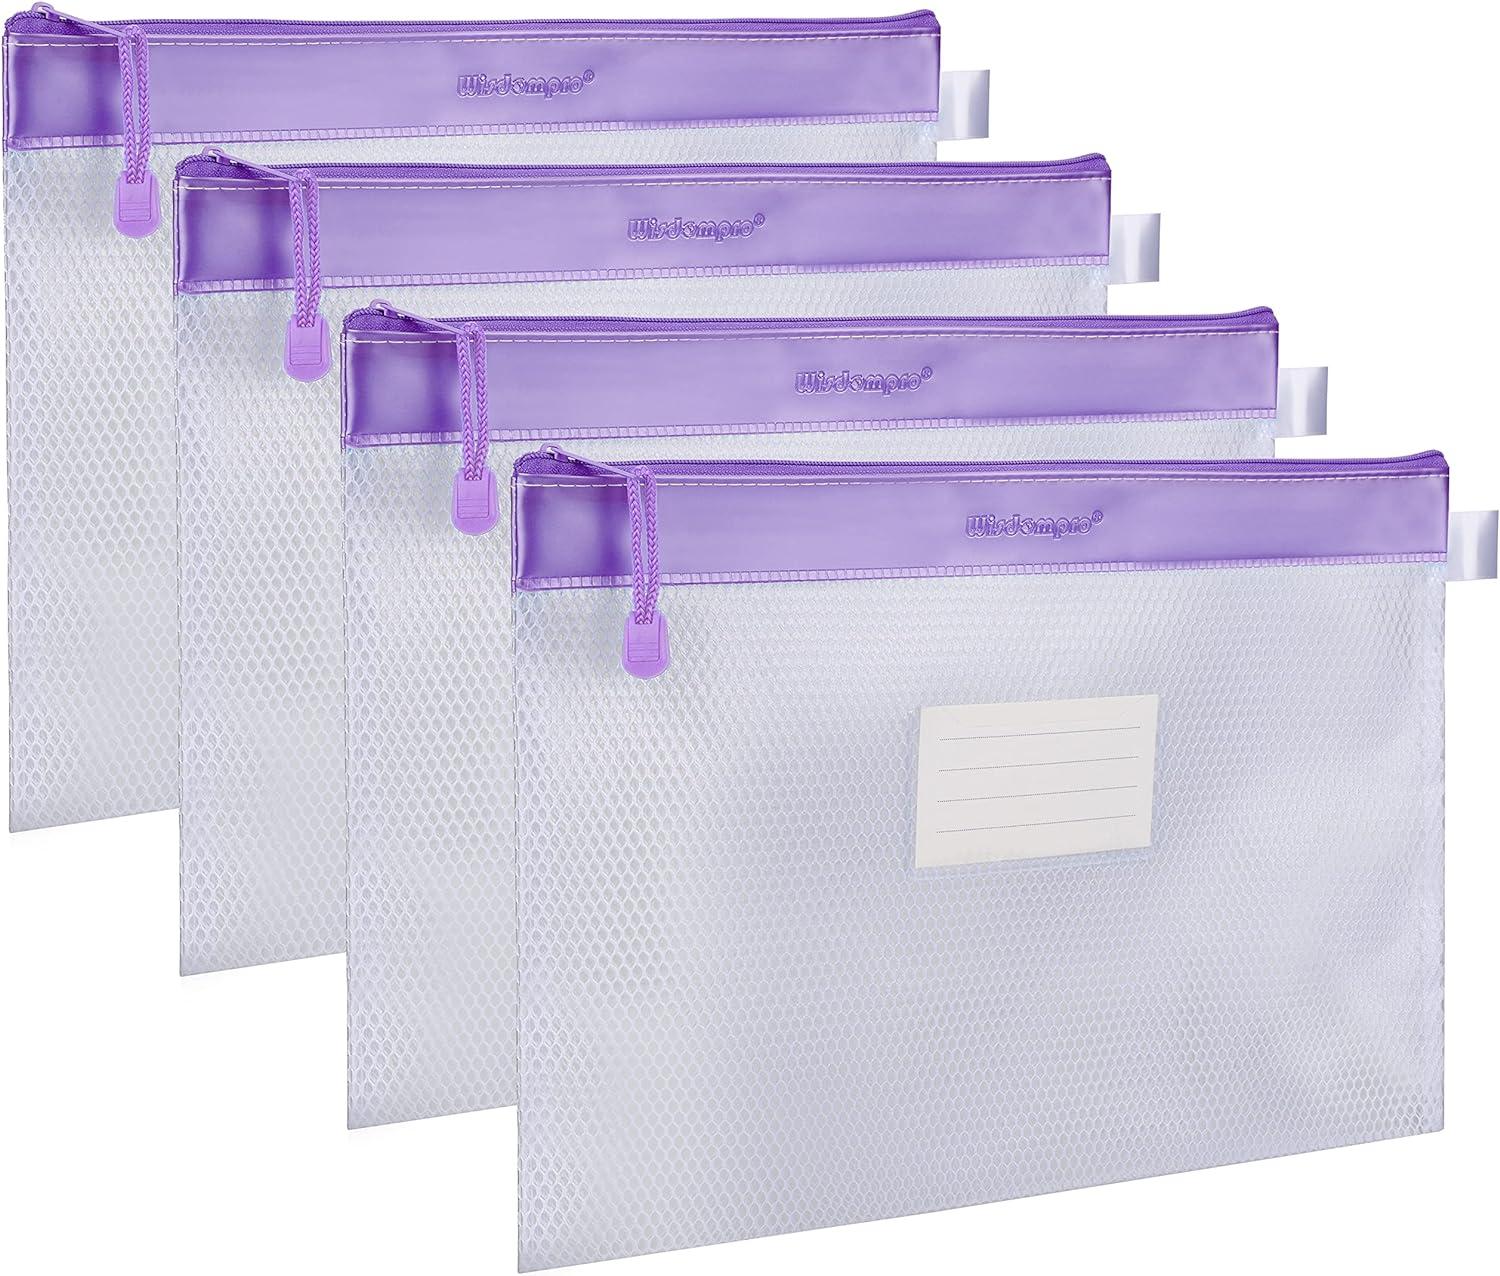 zipper file bag wisdompro 4 pack a4 size paper document storage file zipper pouches holder with label pocket